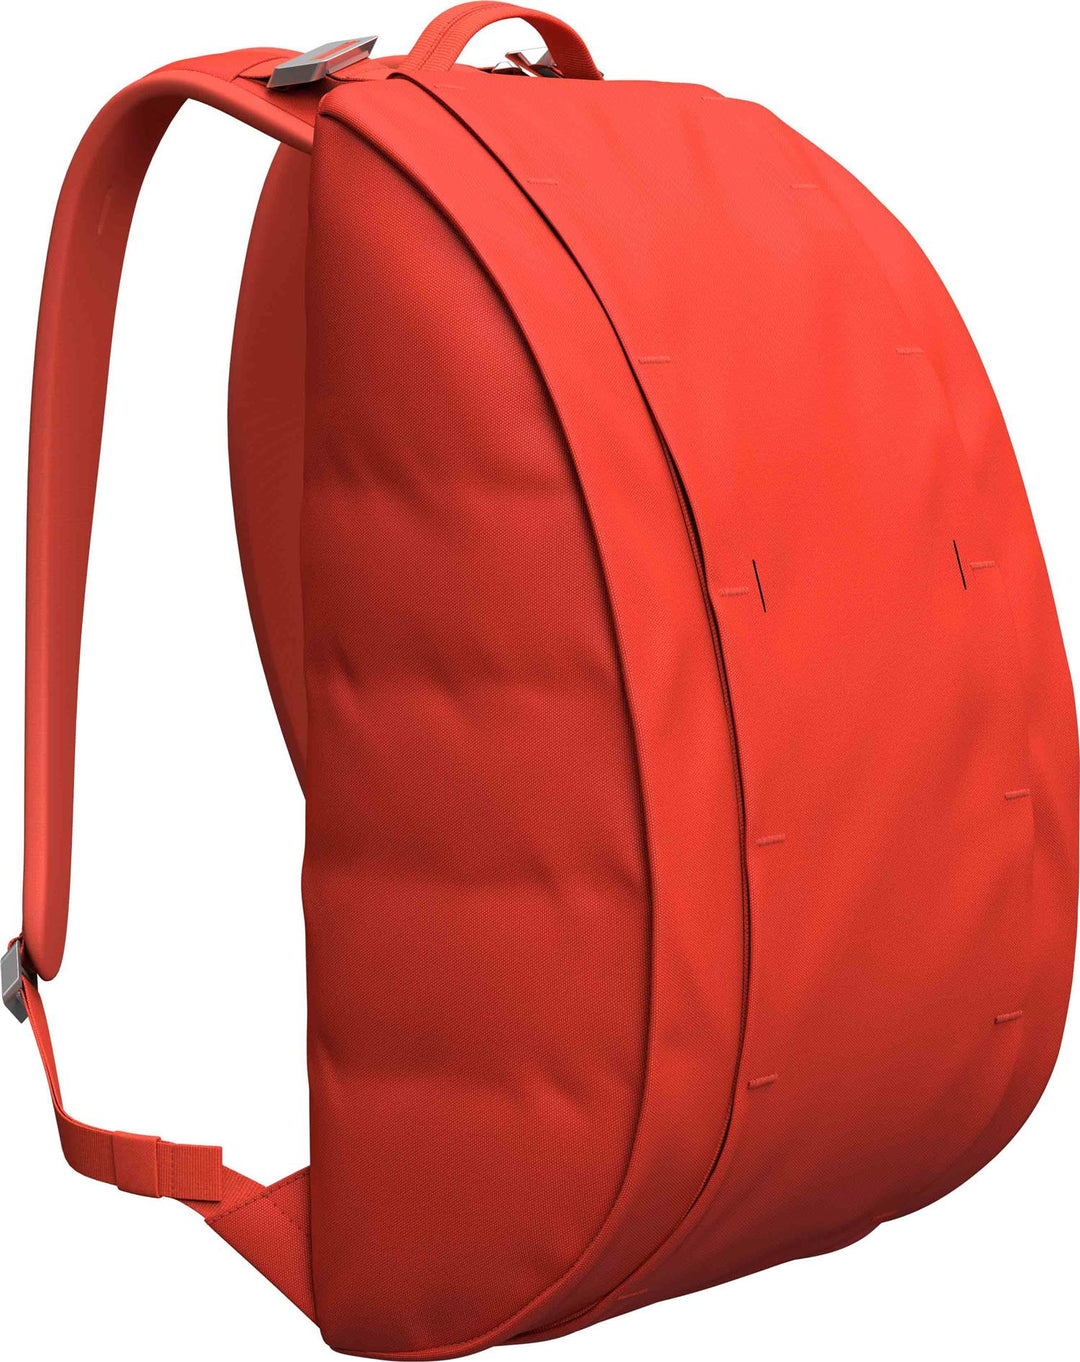 Db Hugger Base Backpack 15L Falu Red